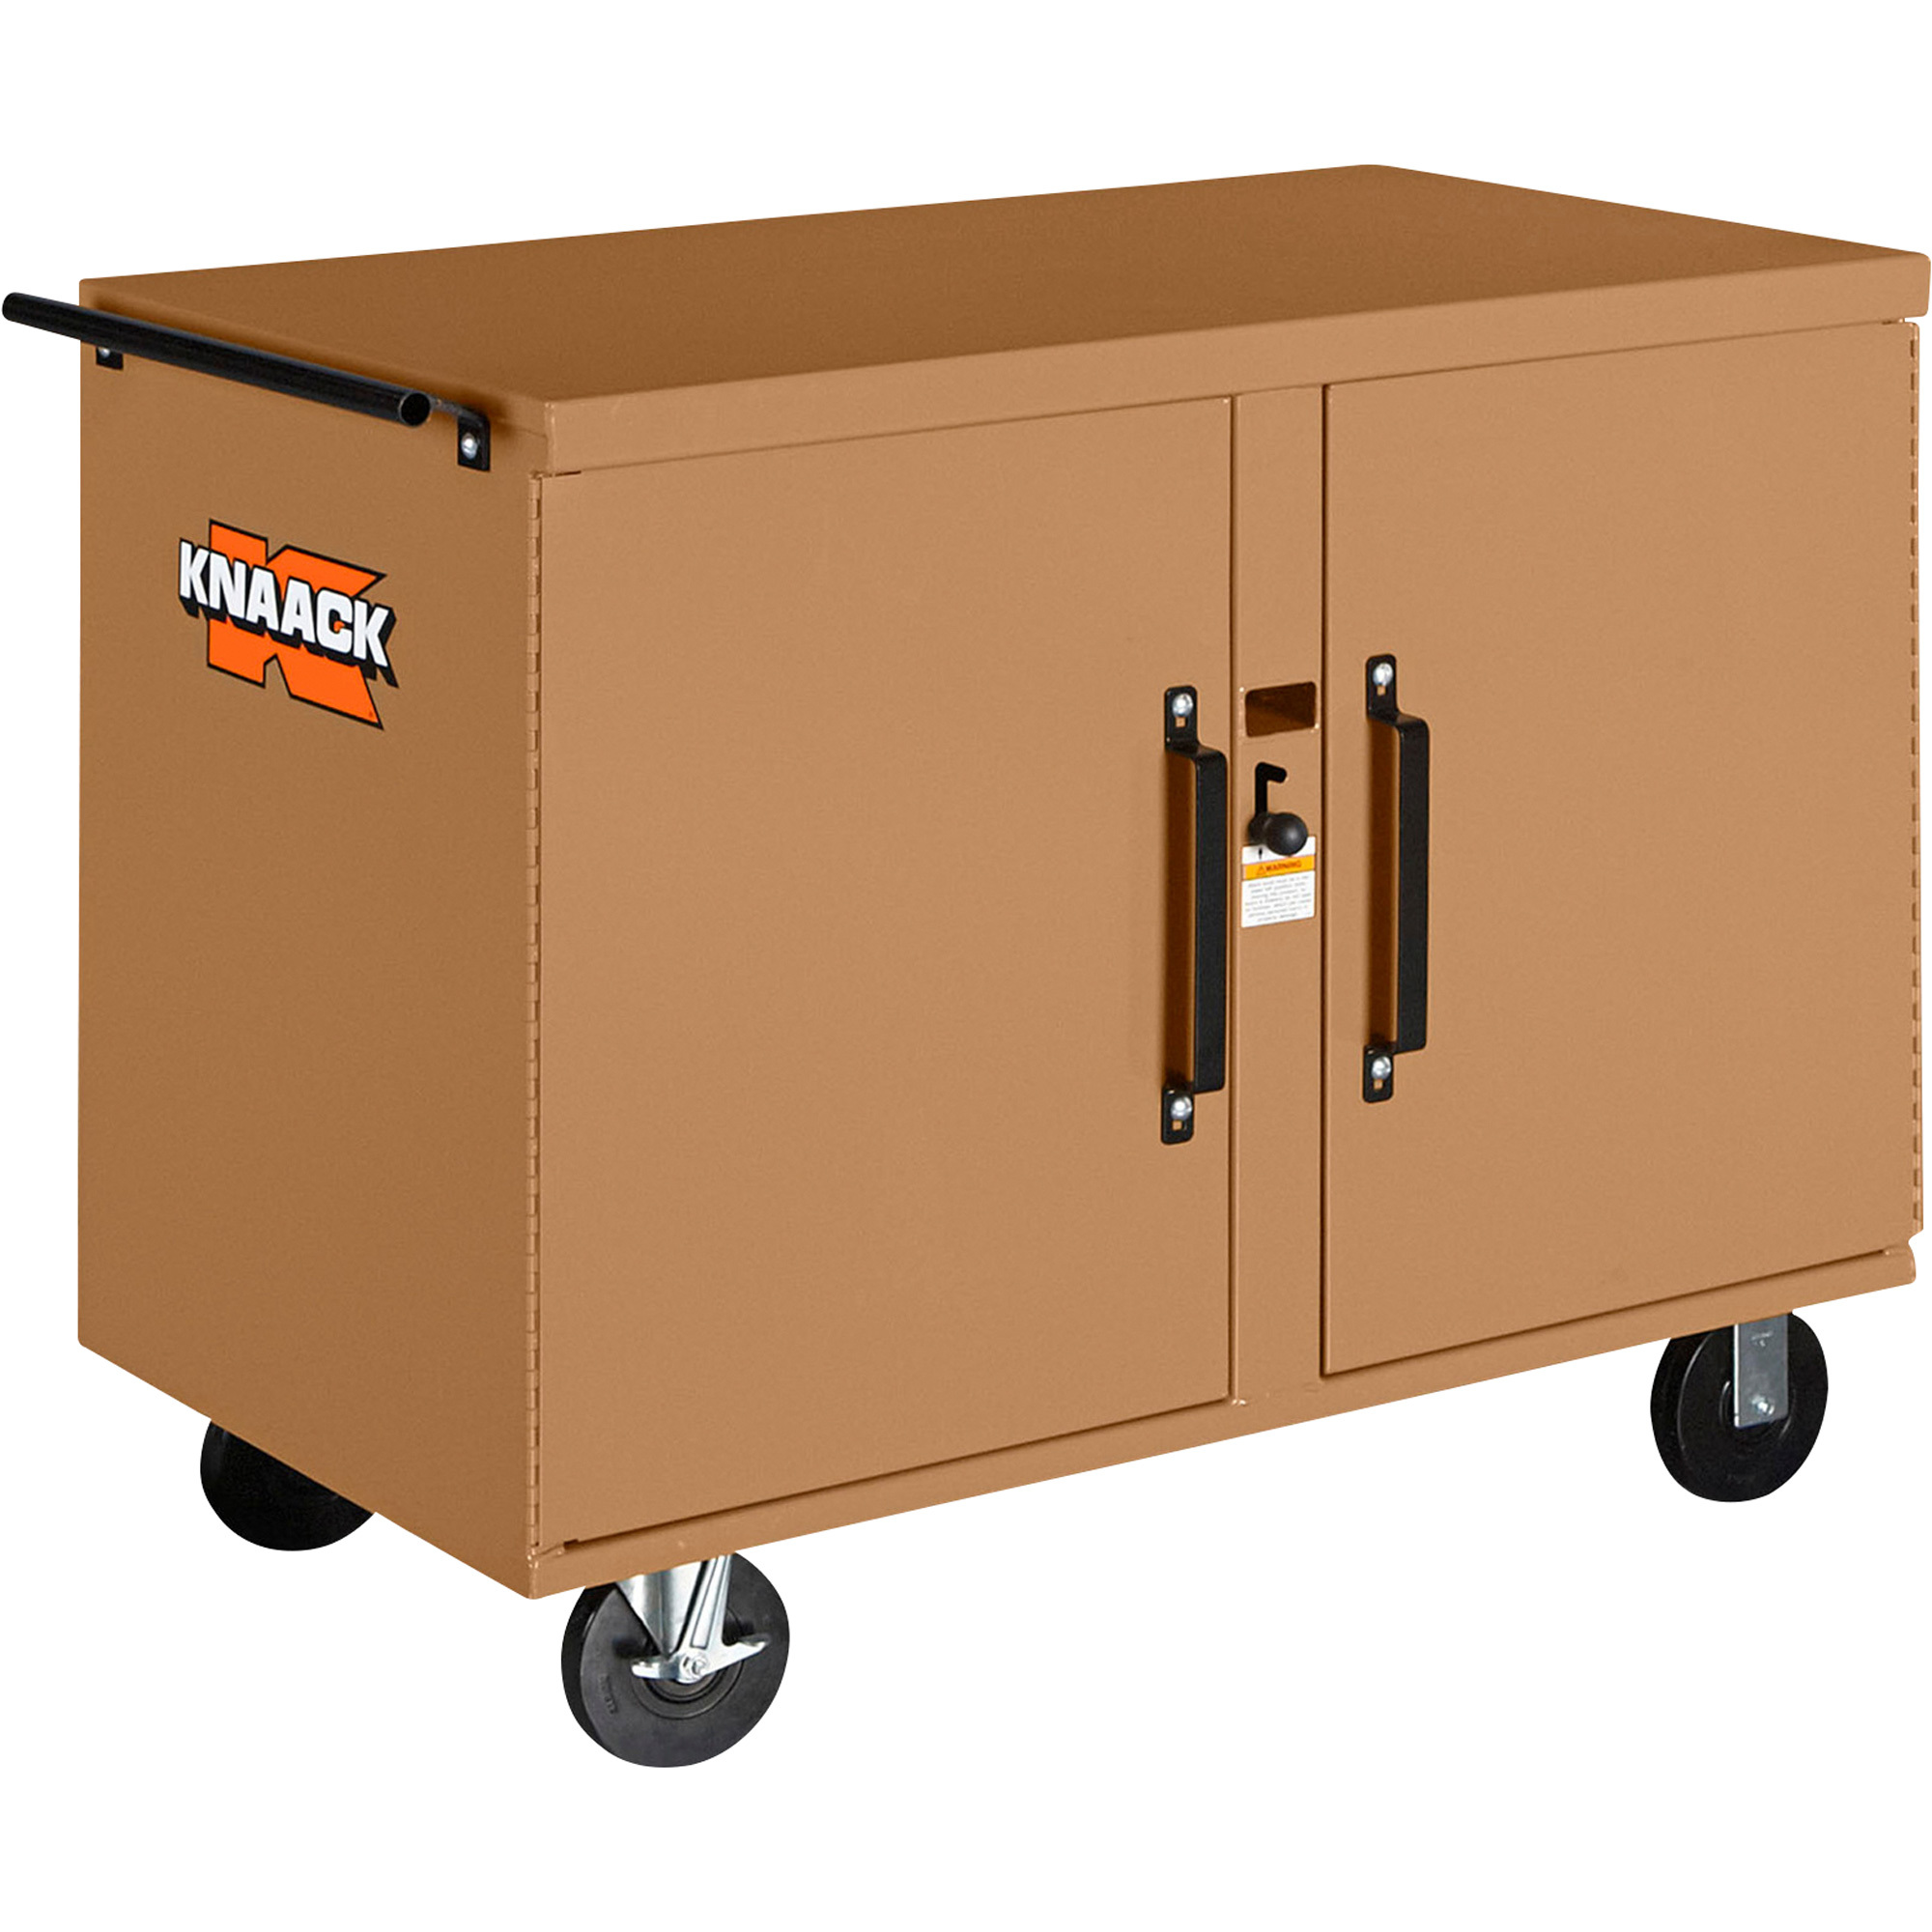 Storagemaster 1000-Lb. Capacity Rolling Workbench — Tan, 46 1/4Inch W x 25Inch D. x 37 1/2Inch H, Model - KNAACK 45